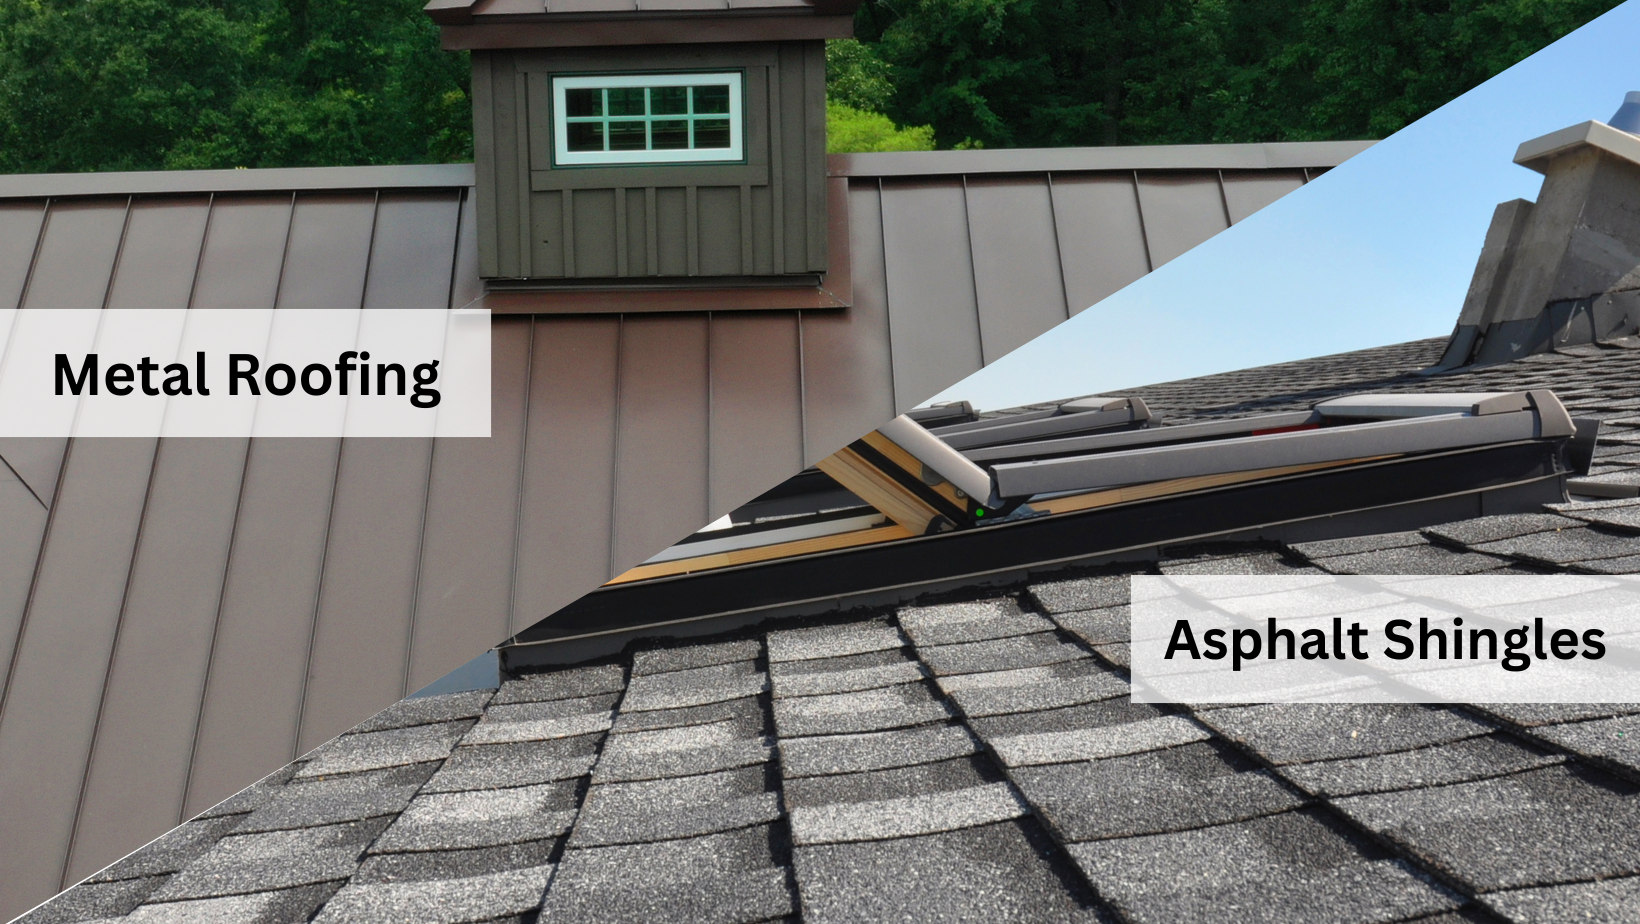 Asphalt Shingles vs Metal Roofing | Invincible Metal Roofing